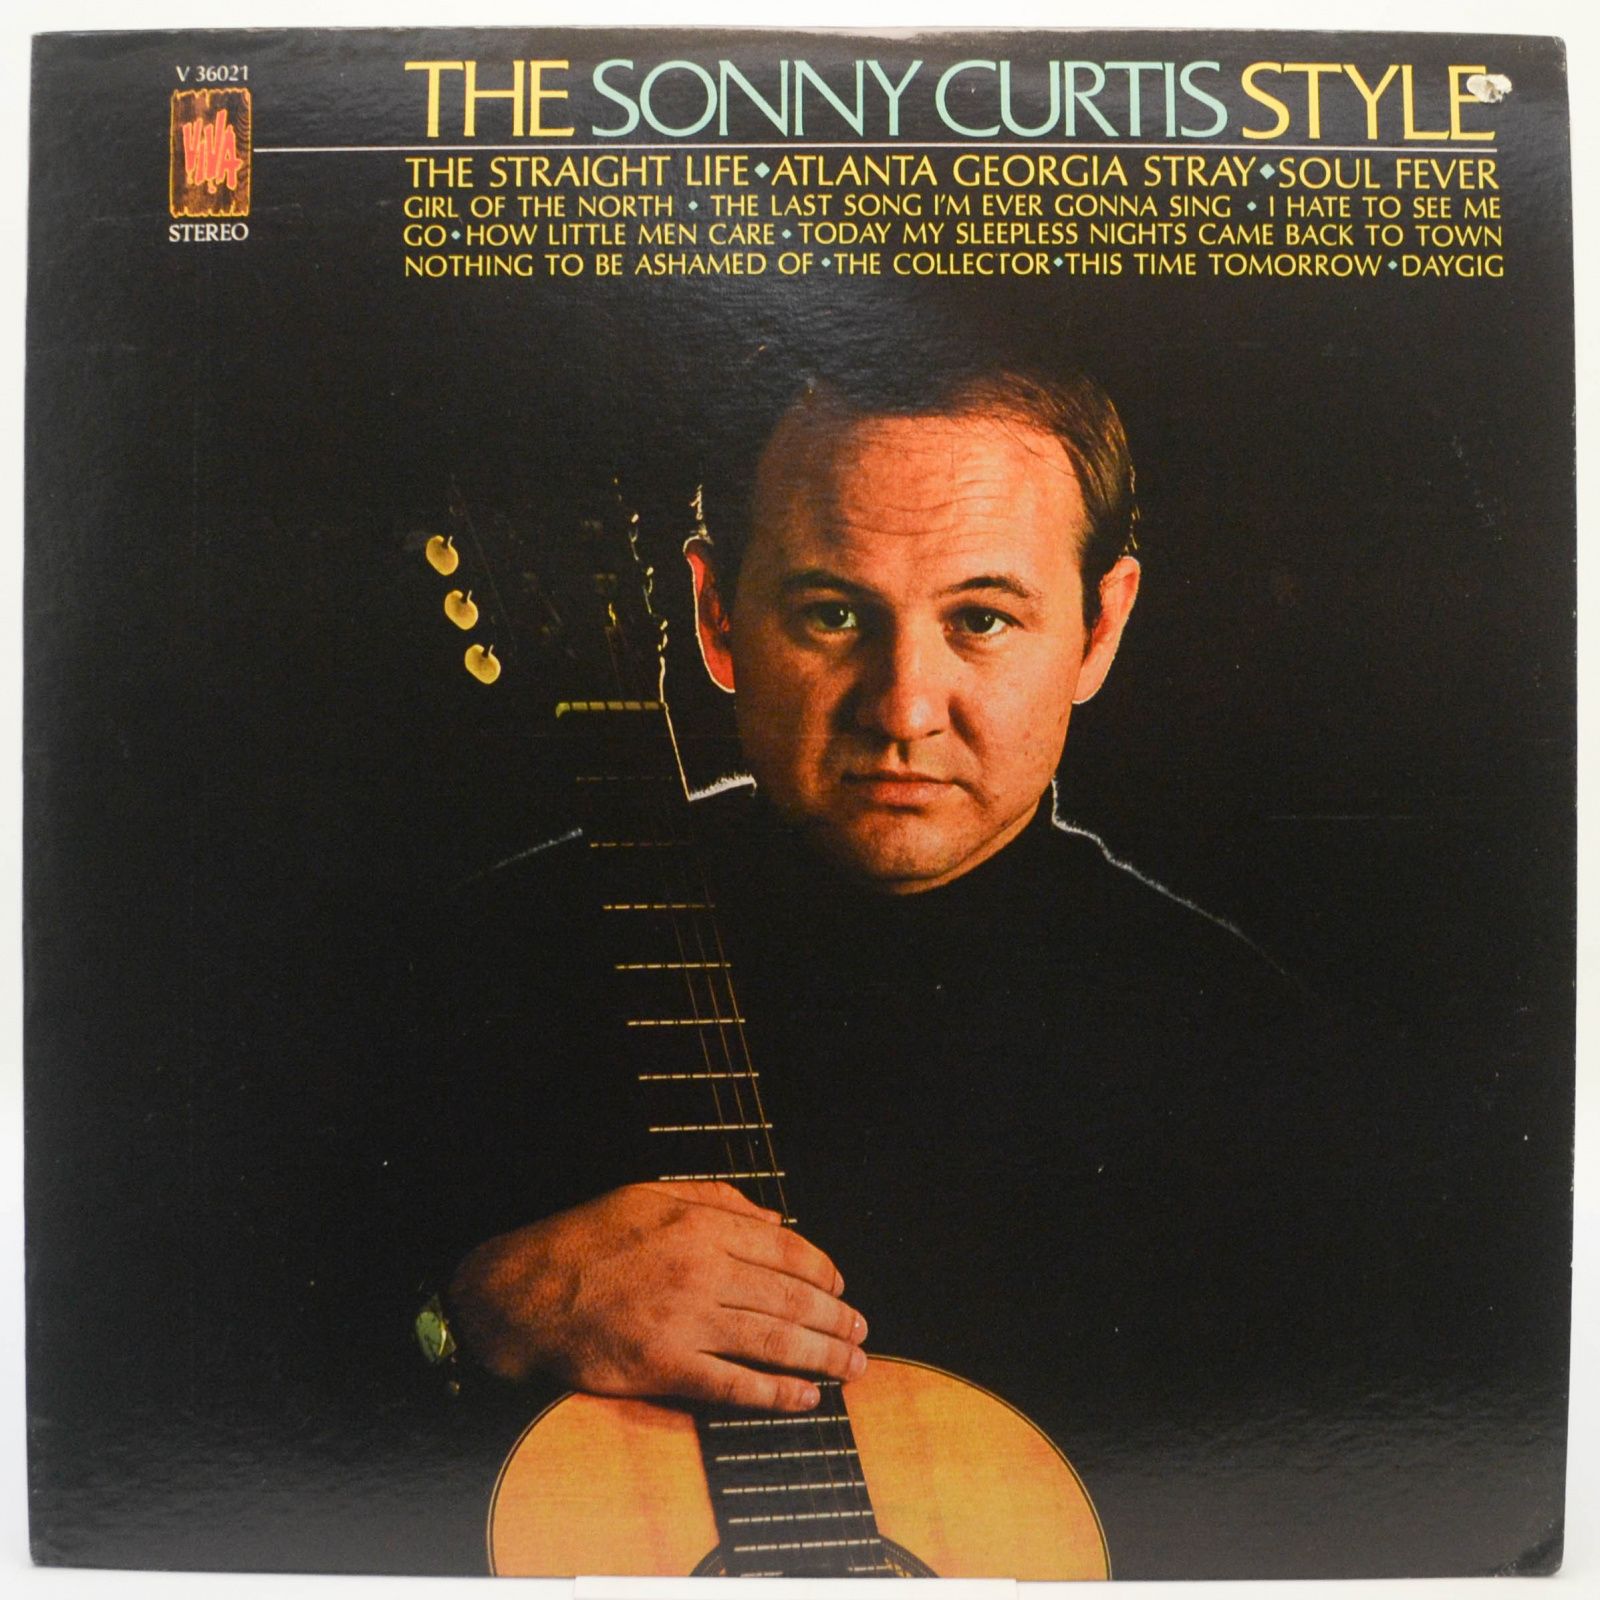 Sonny Curtis — The Sonny Curtis Style (USA), 1969